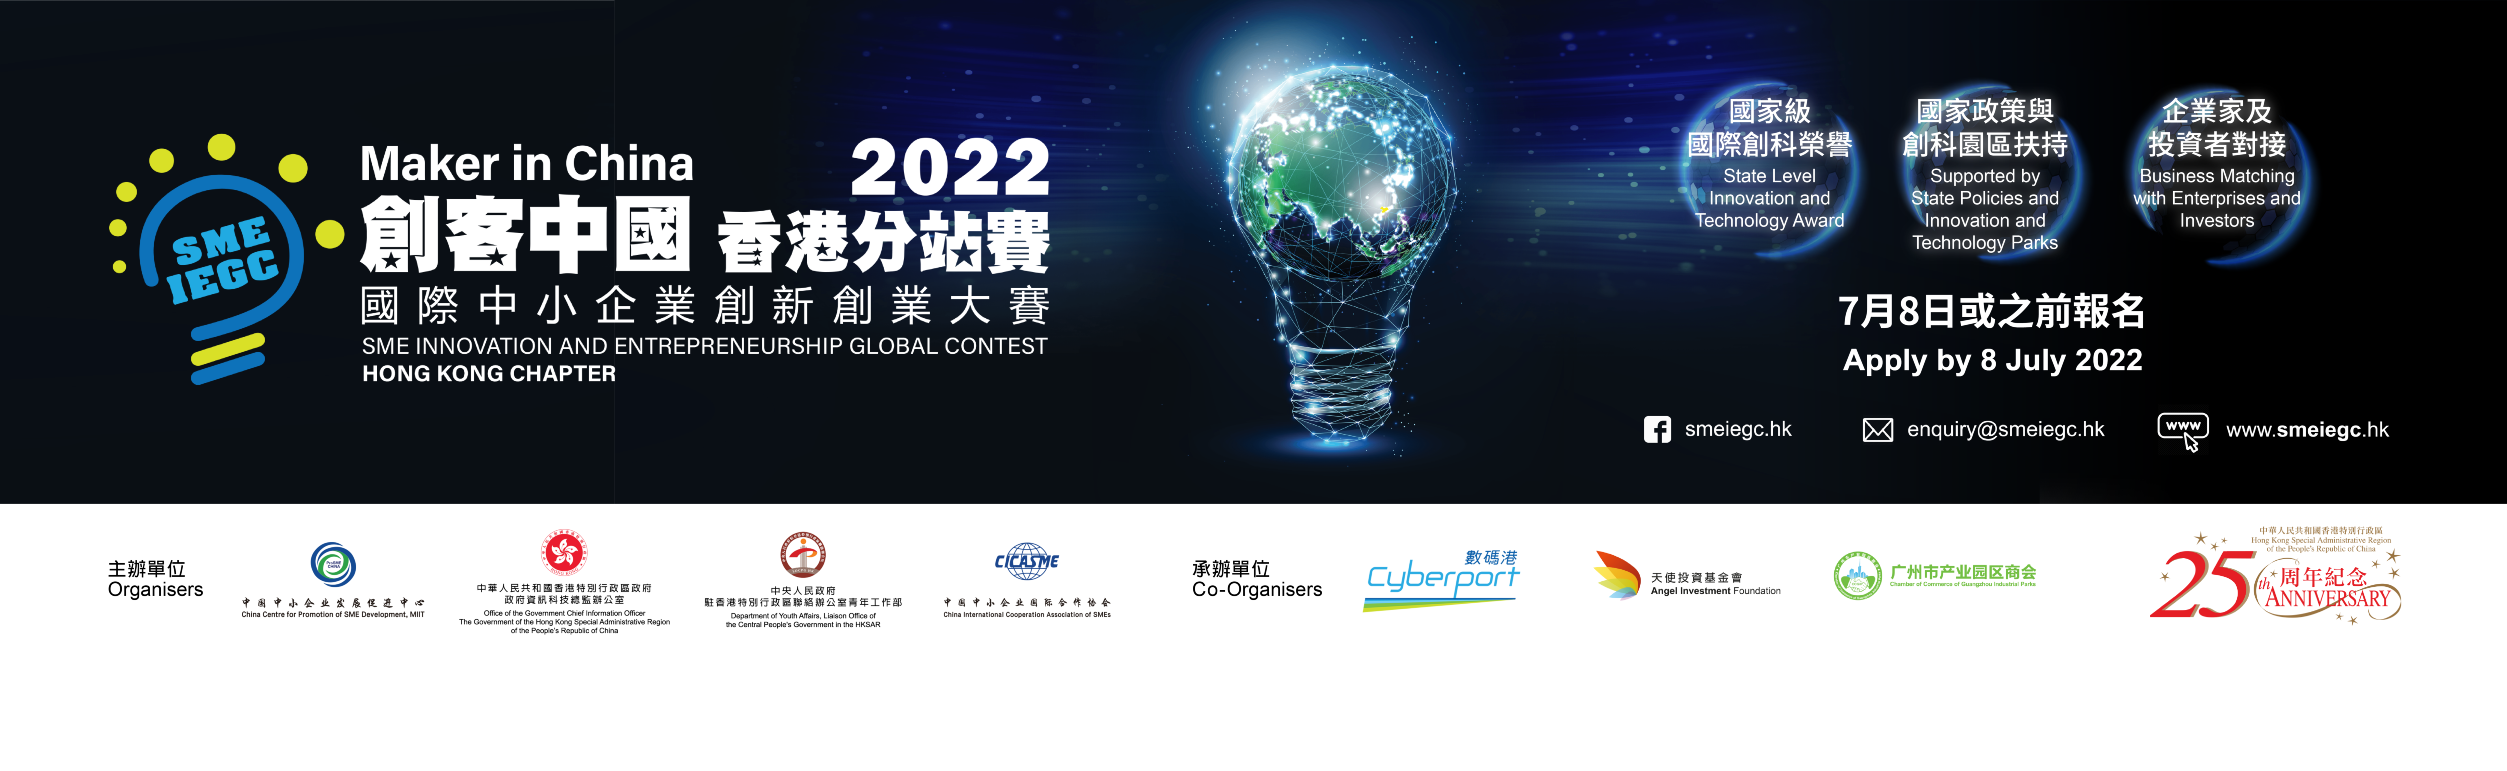 Maker in China 2022 - SME Innovation and Entrepreneurship Global Contest Hong Kong Chapter